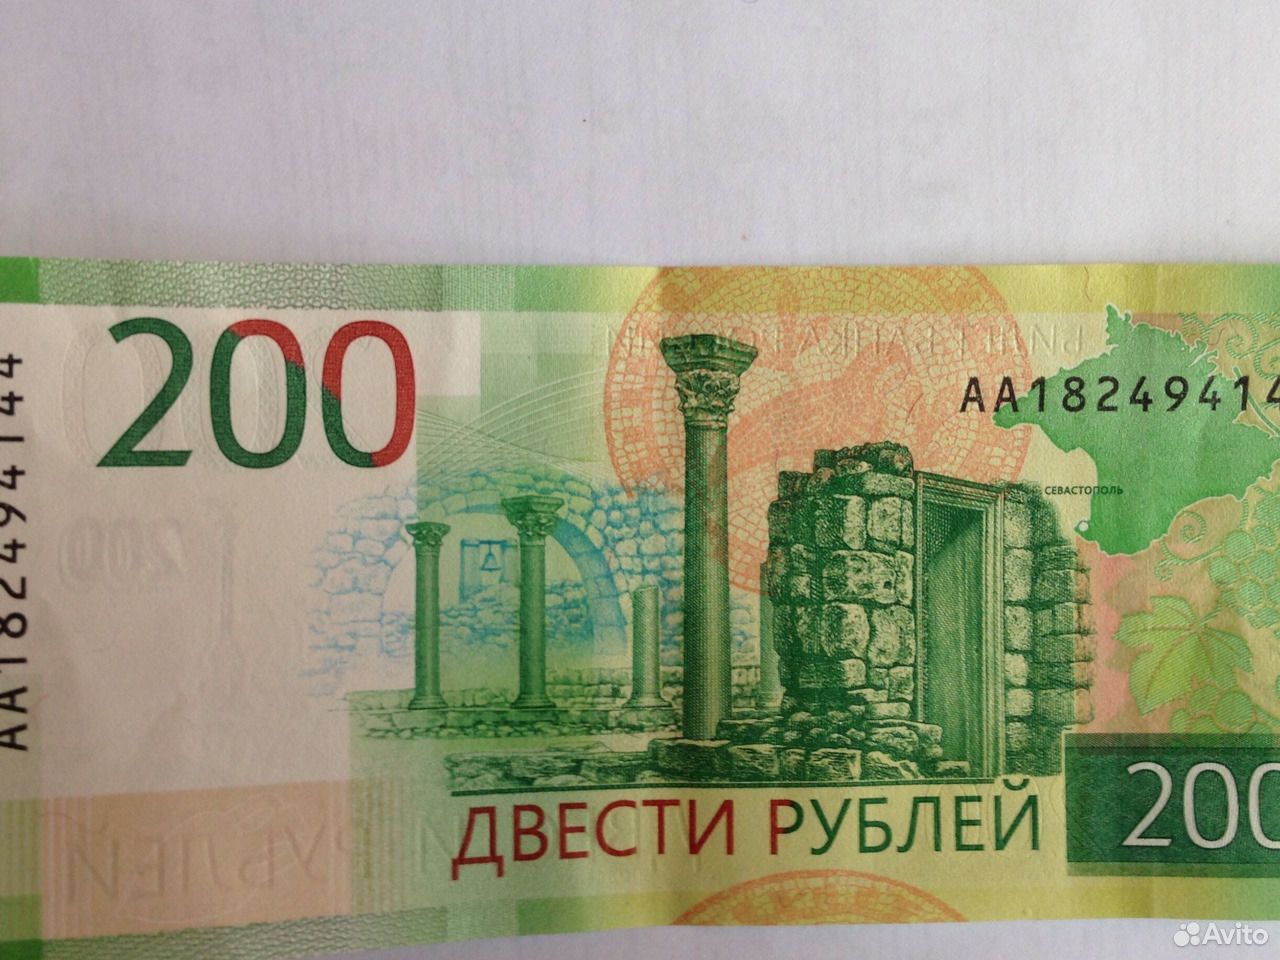 200 Рублей купюра спереди.